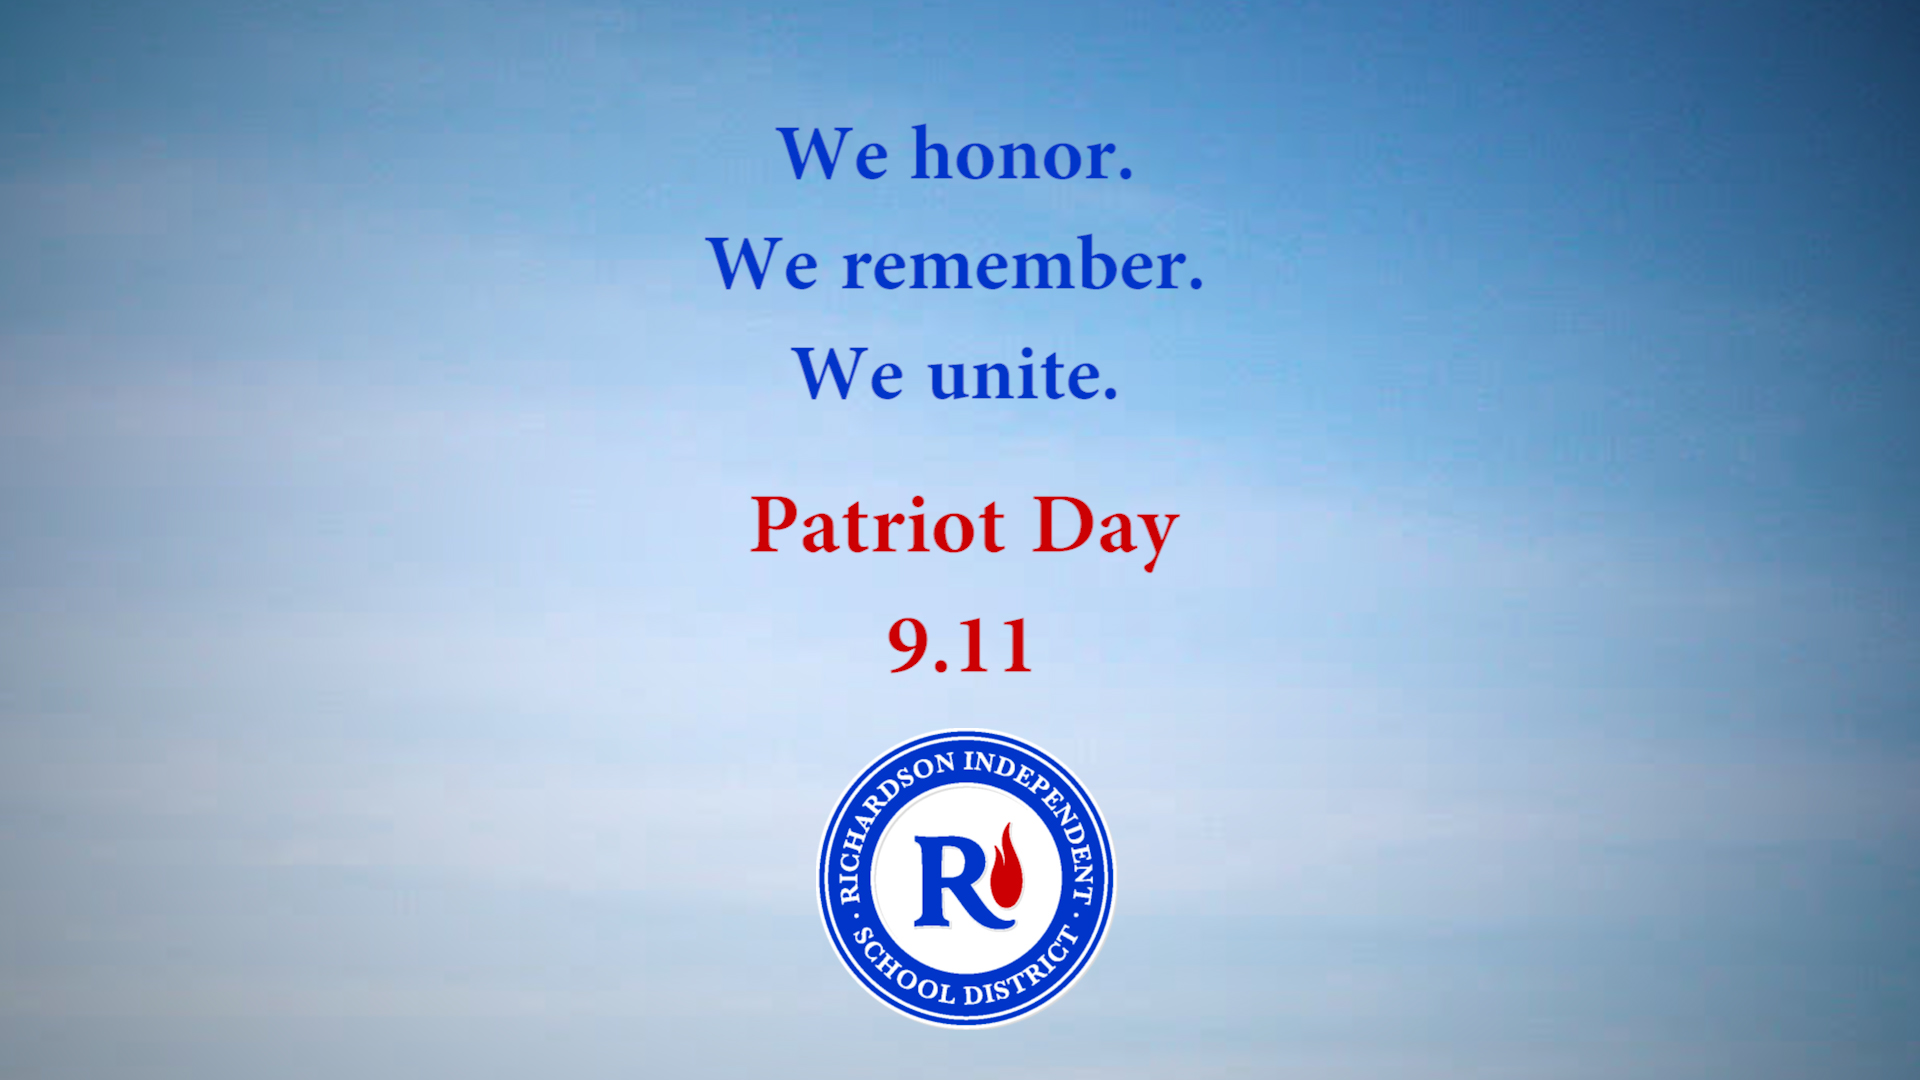 Patriot day